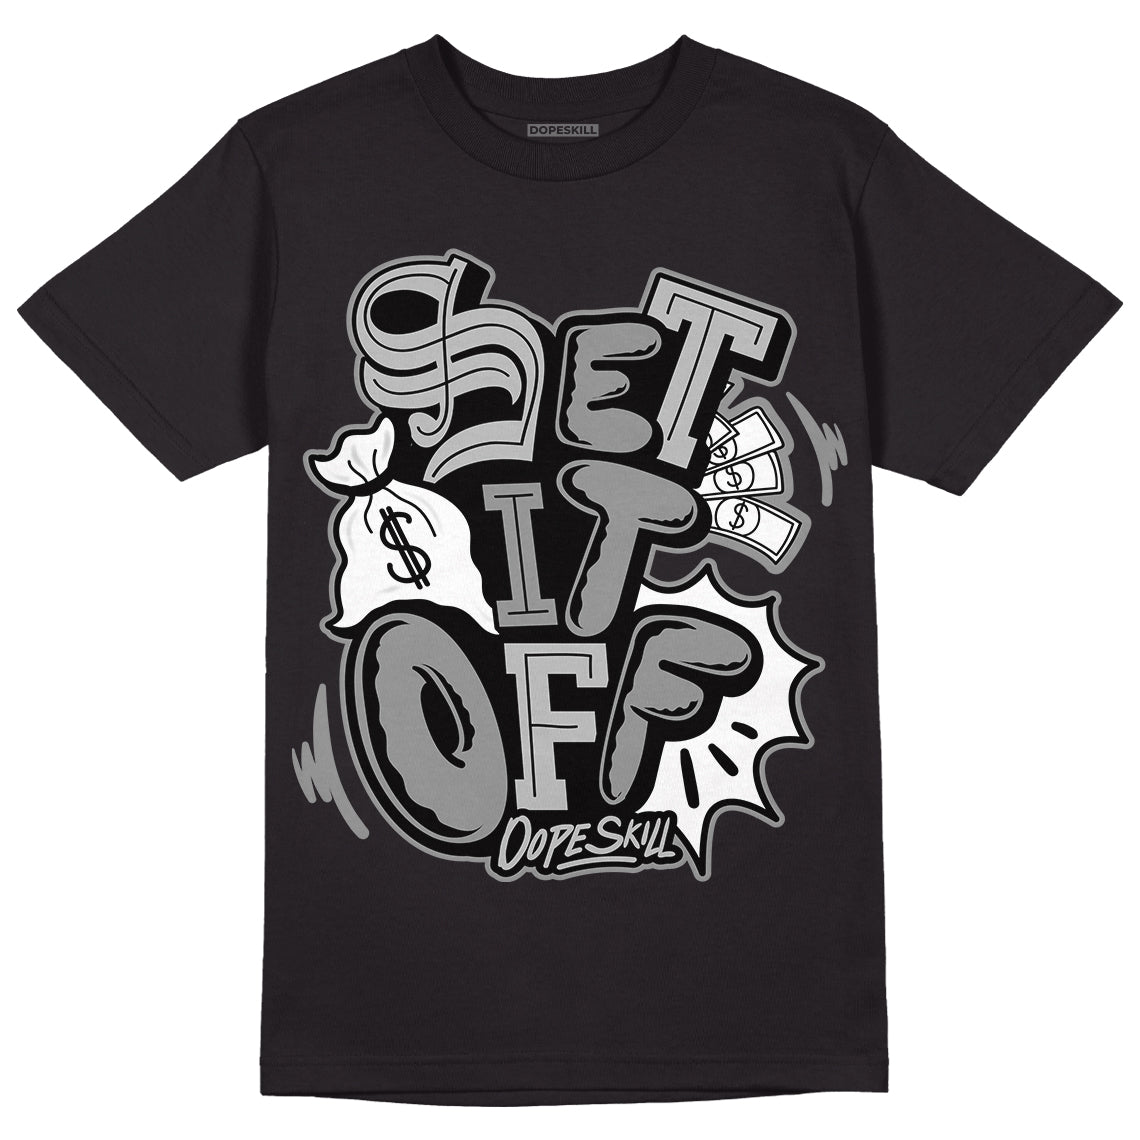 YZ 450 Utility Black DopeSkill T-Shirt Set It Off Graphic - Black